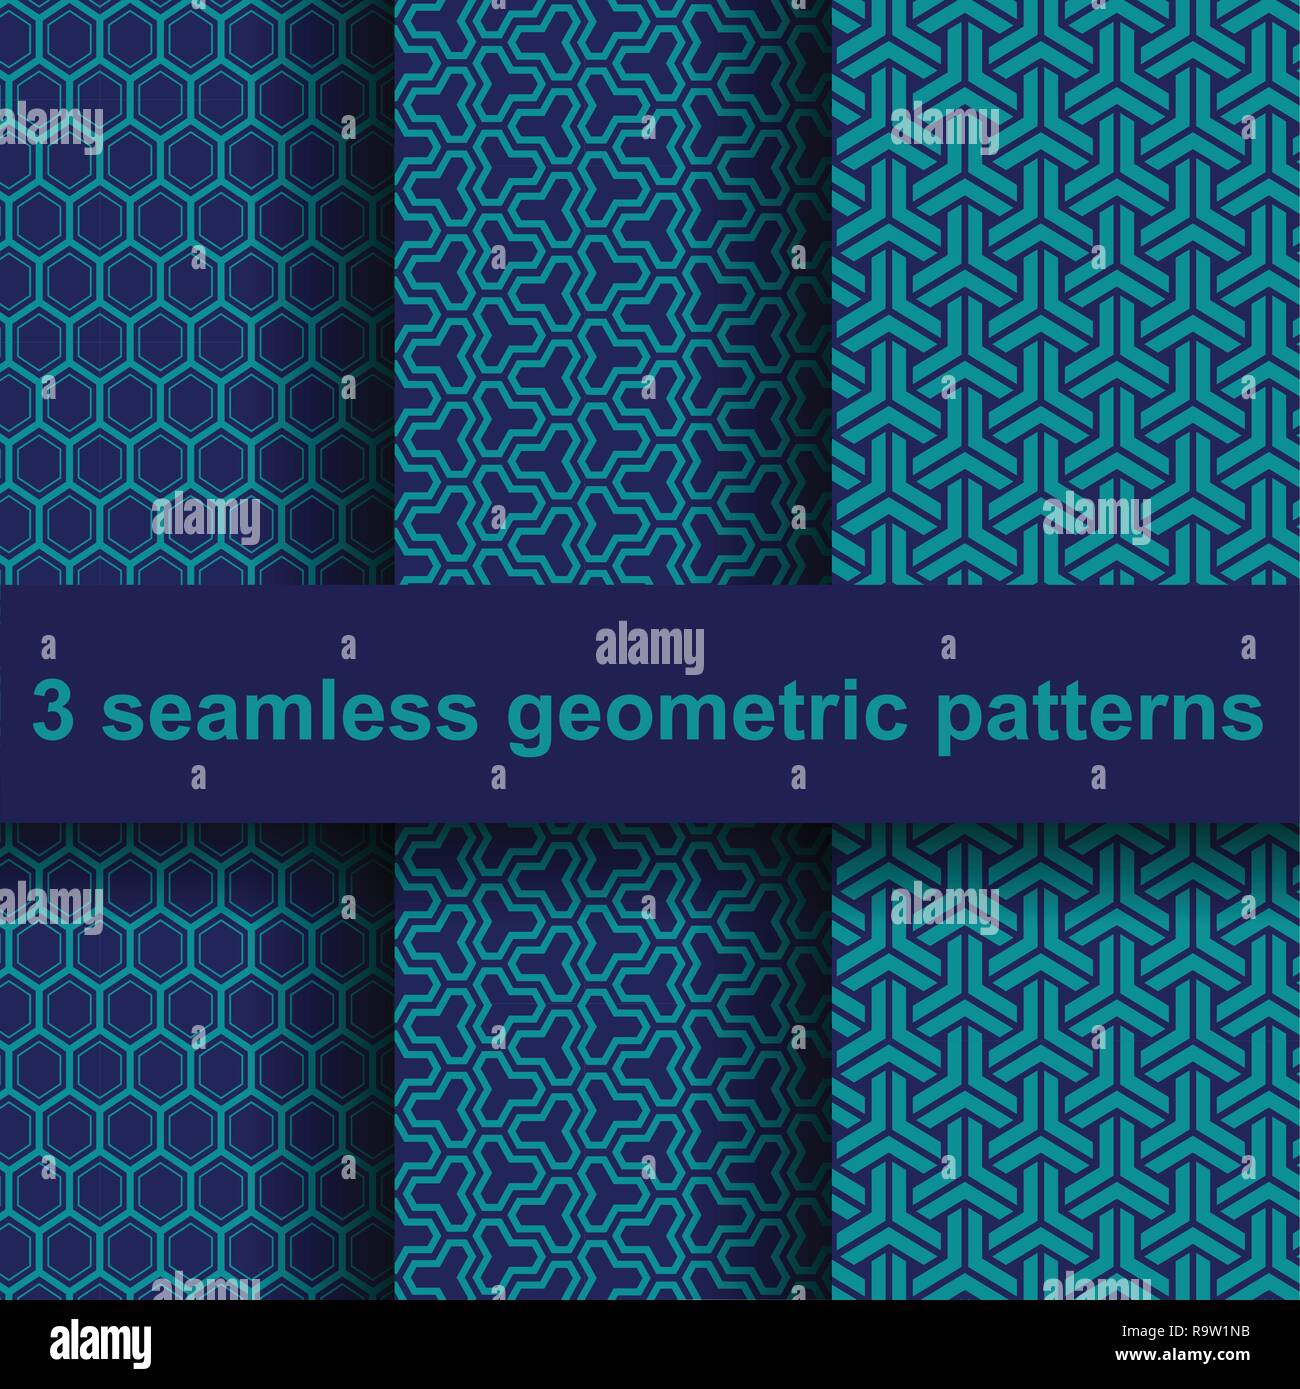 3 seamless geometric patterns. Stock Vector